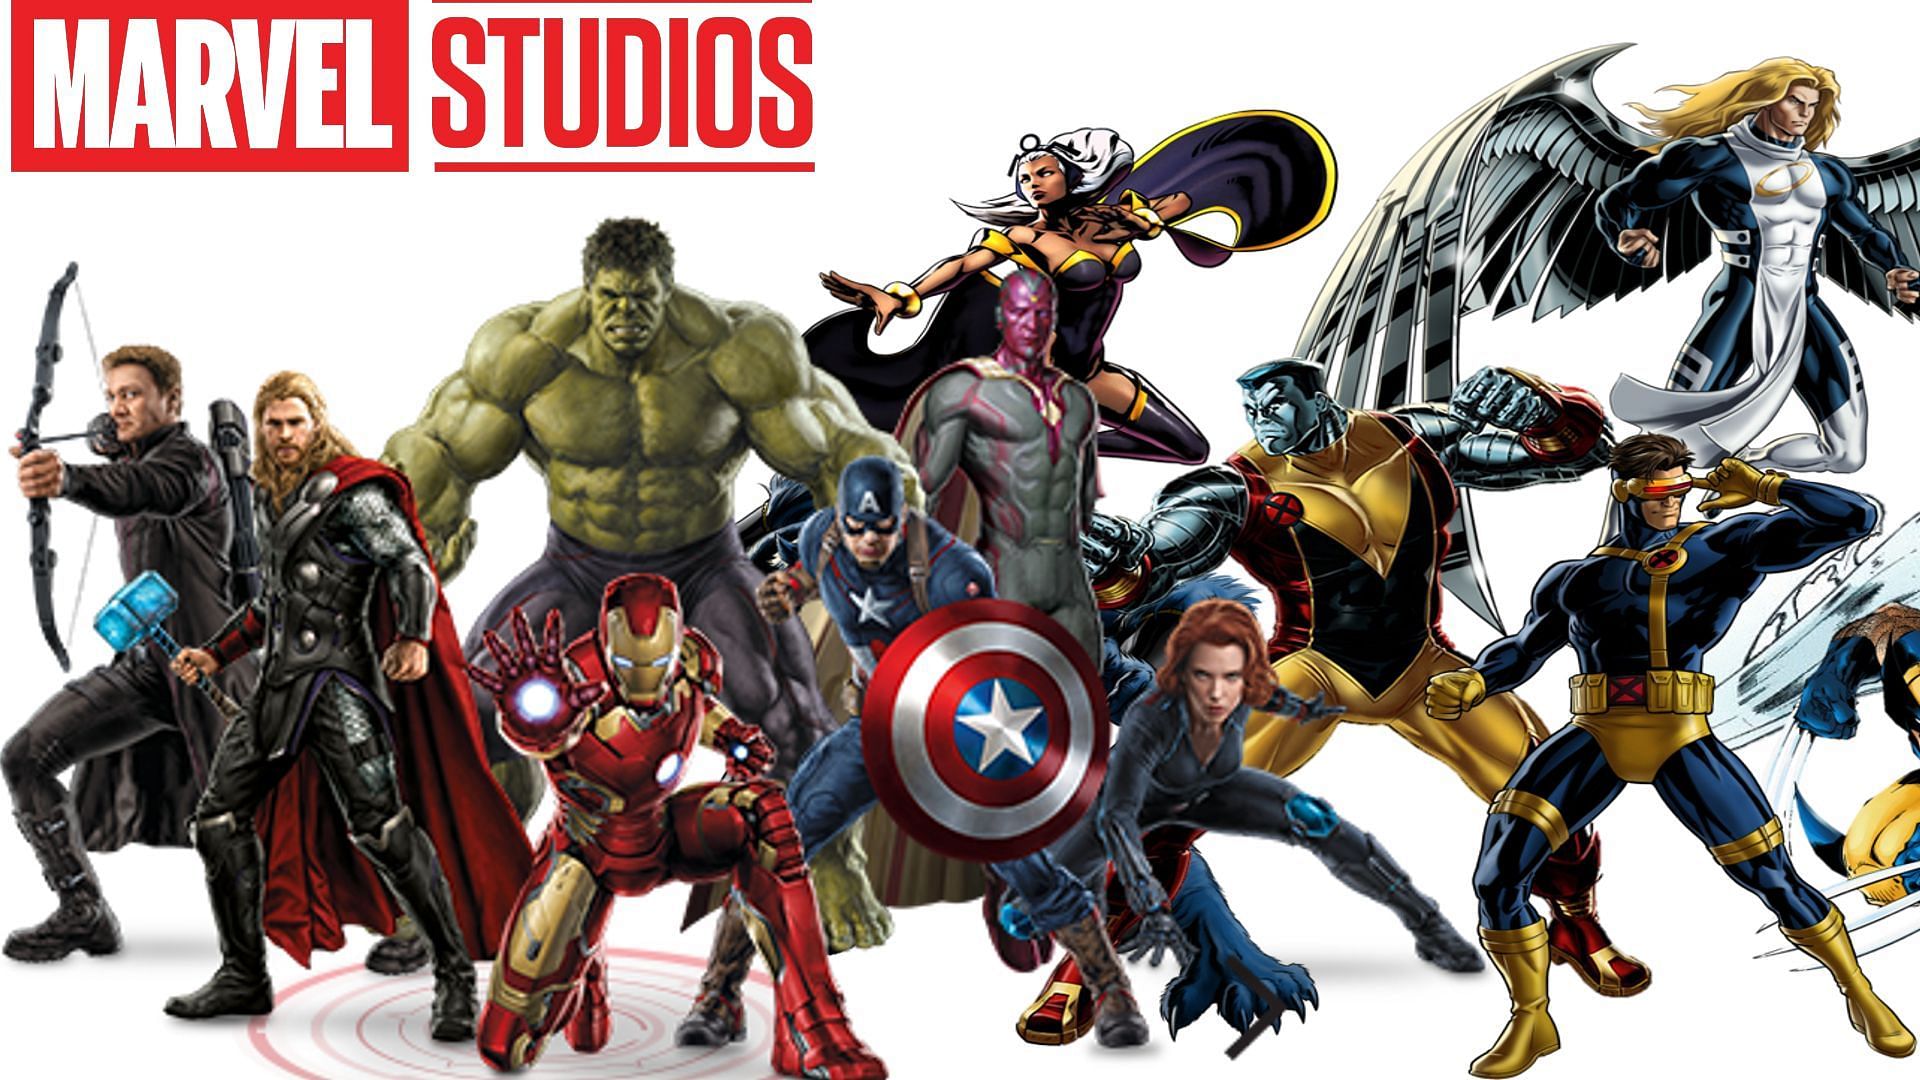 X-Men and Avengers (Images via Marvel Entertainment)